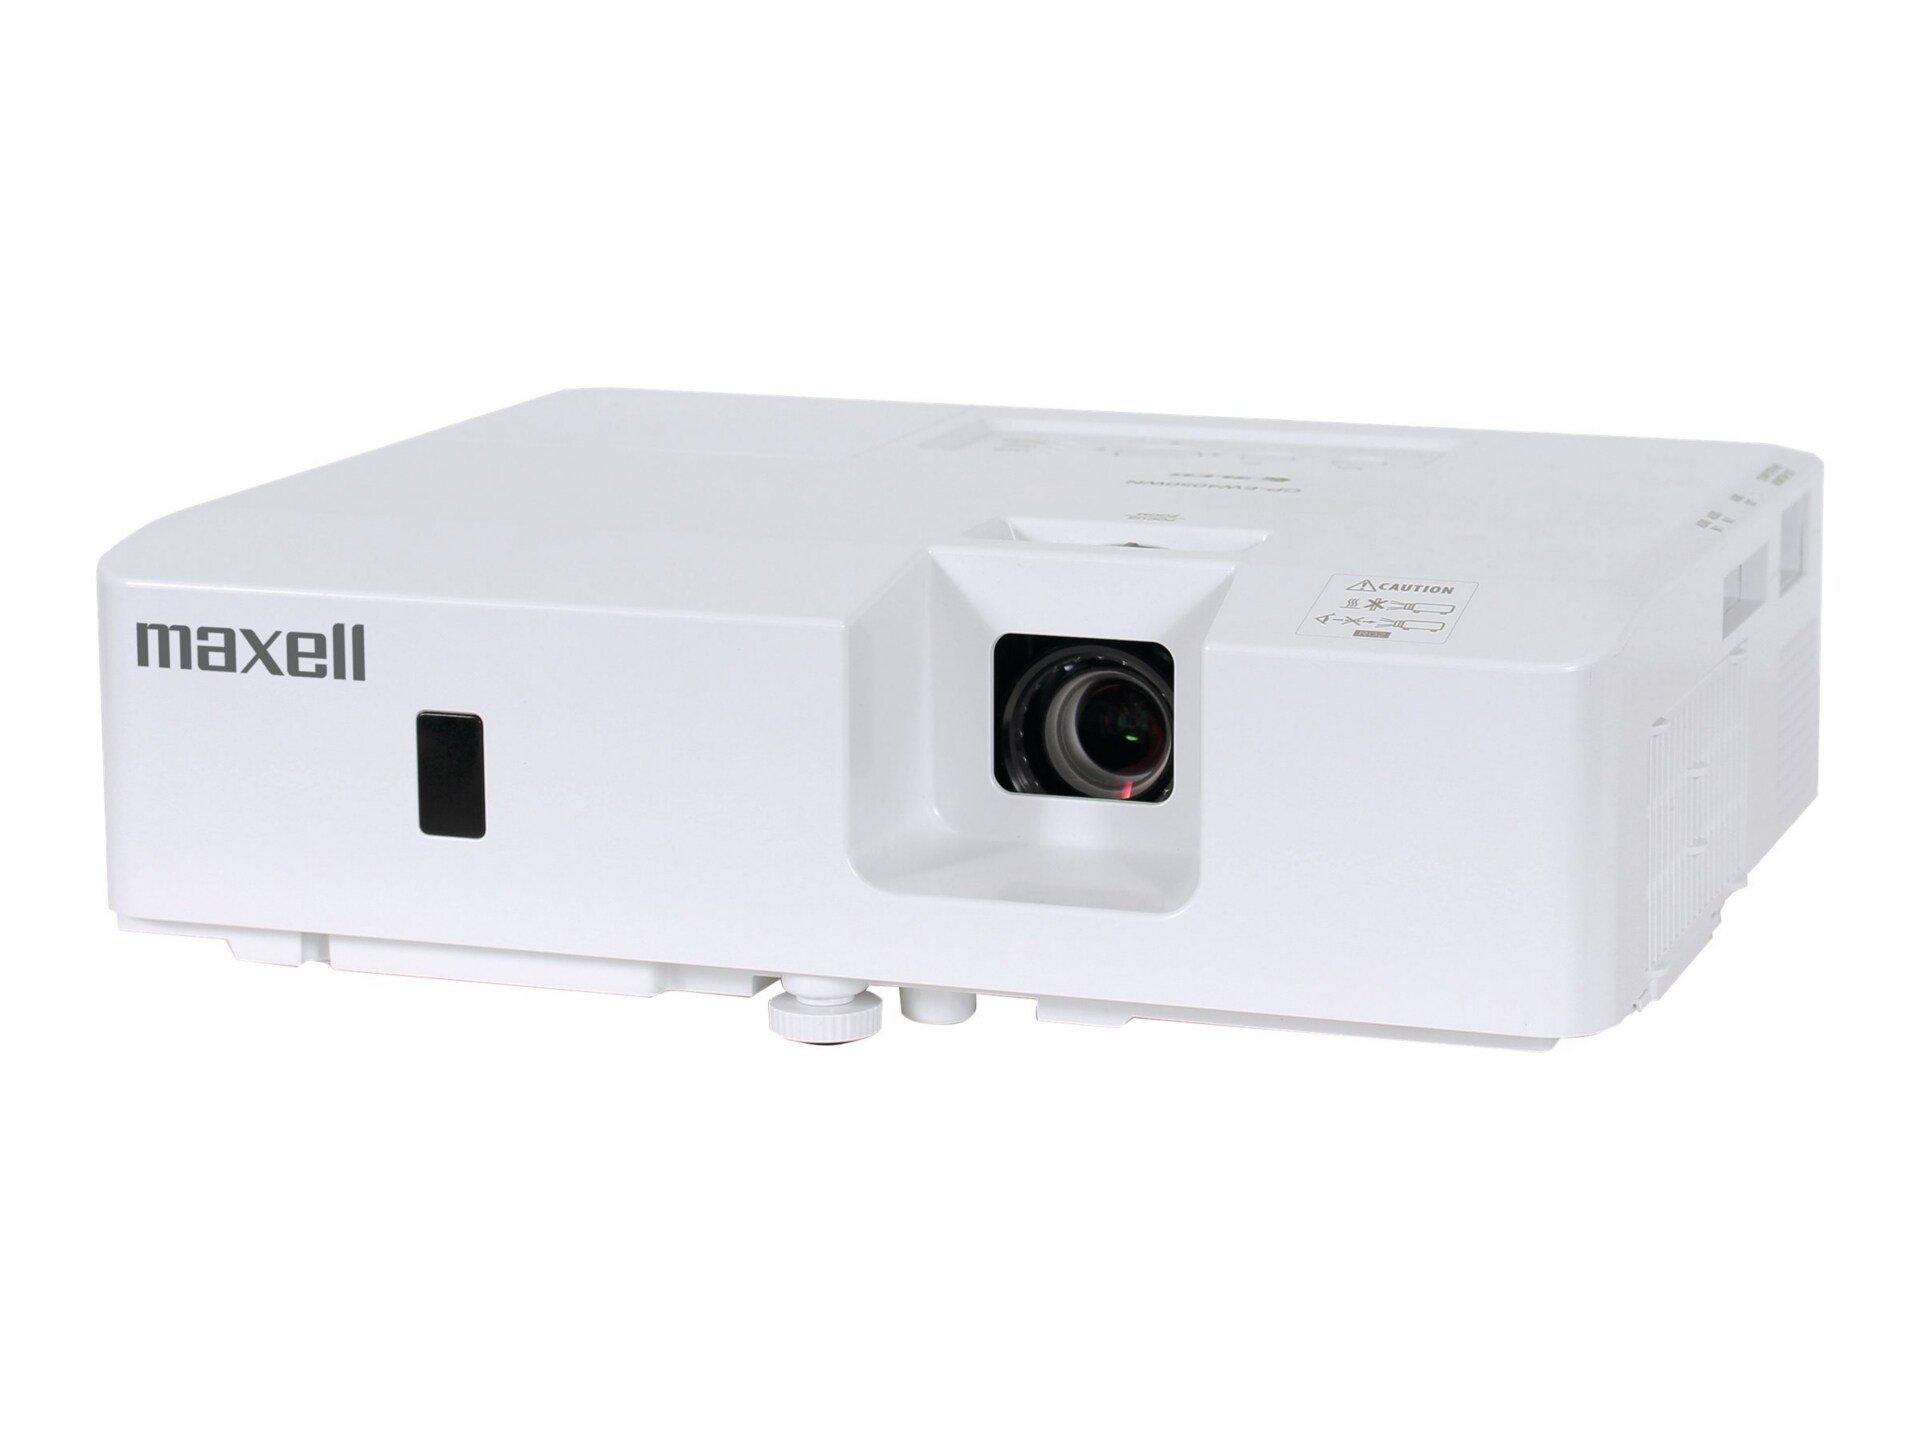 Maxell MC-EX3551 - 3LCD projector - LAN